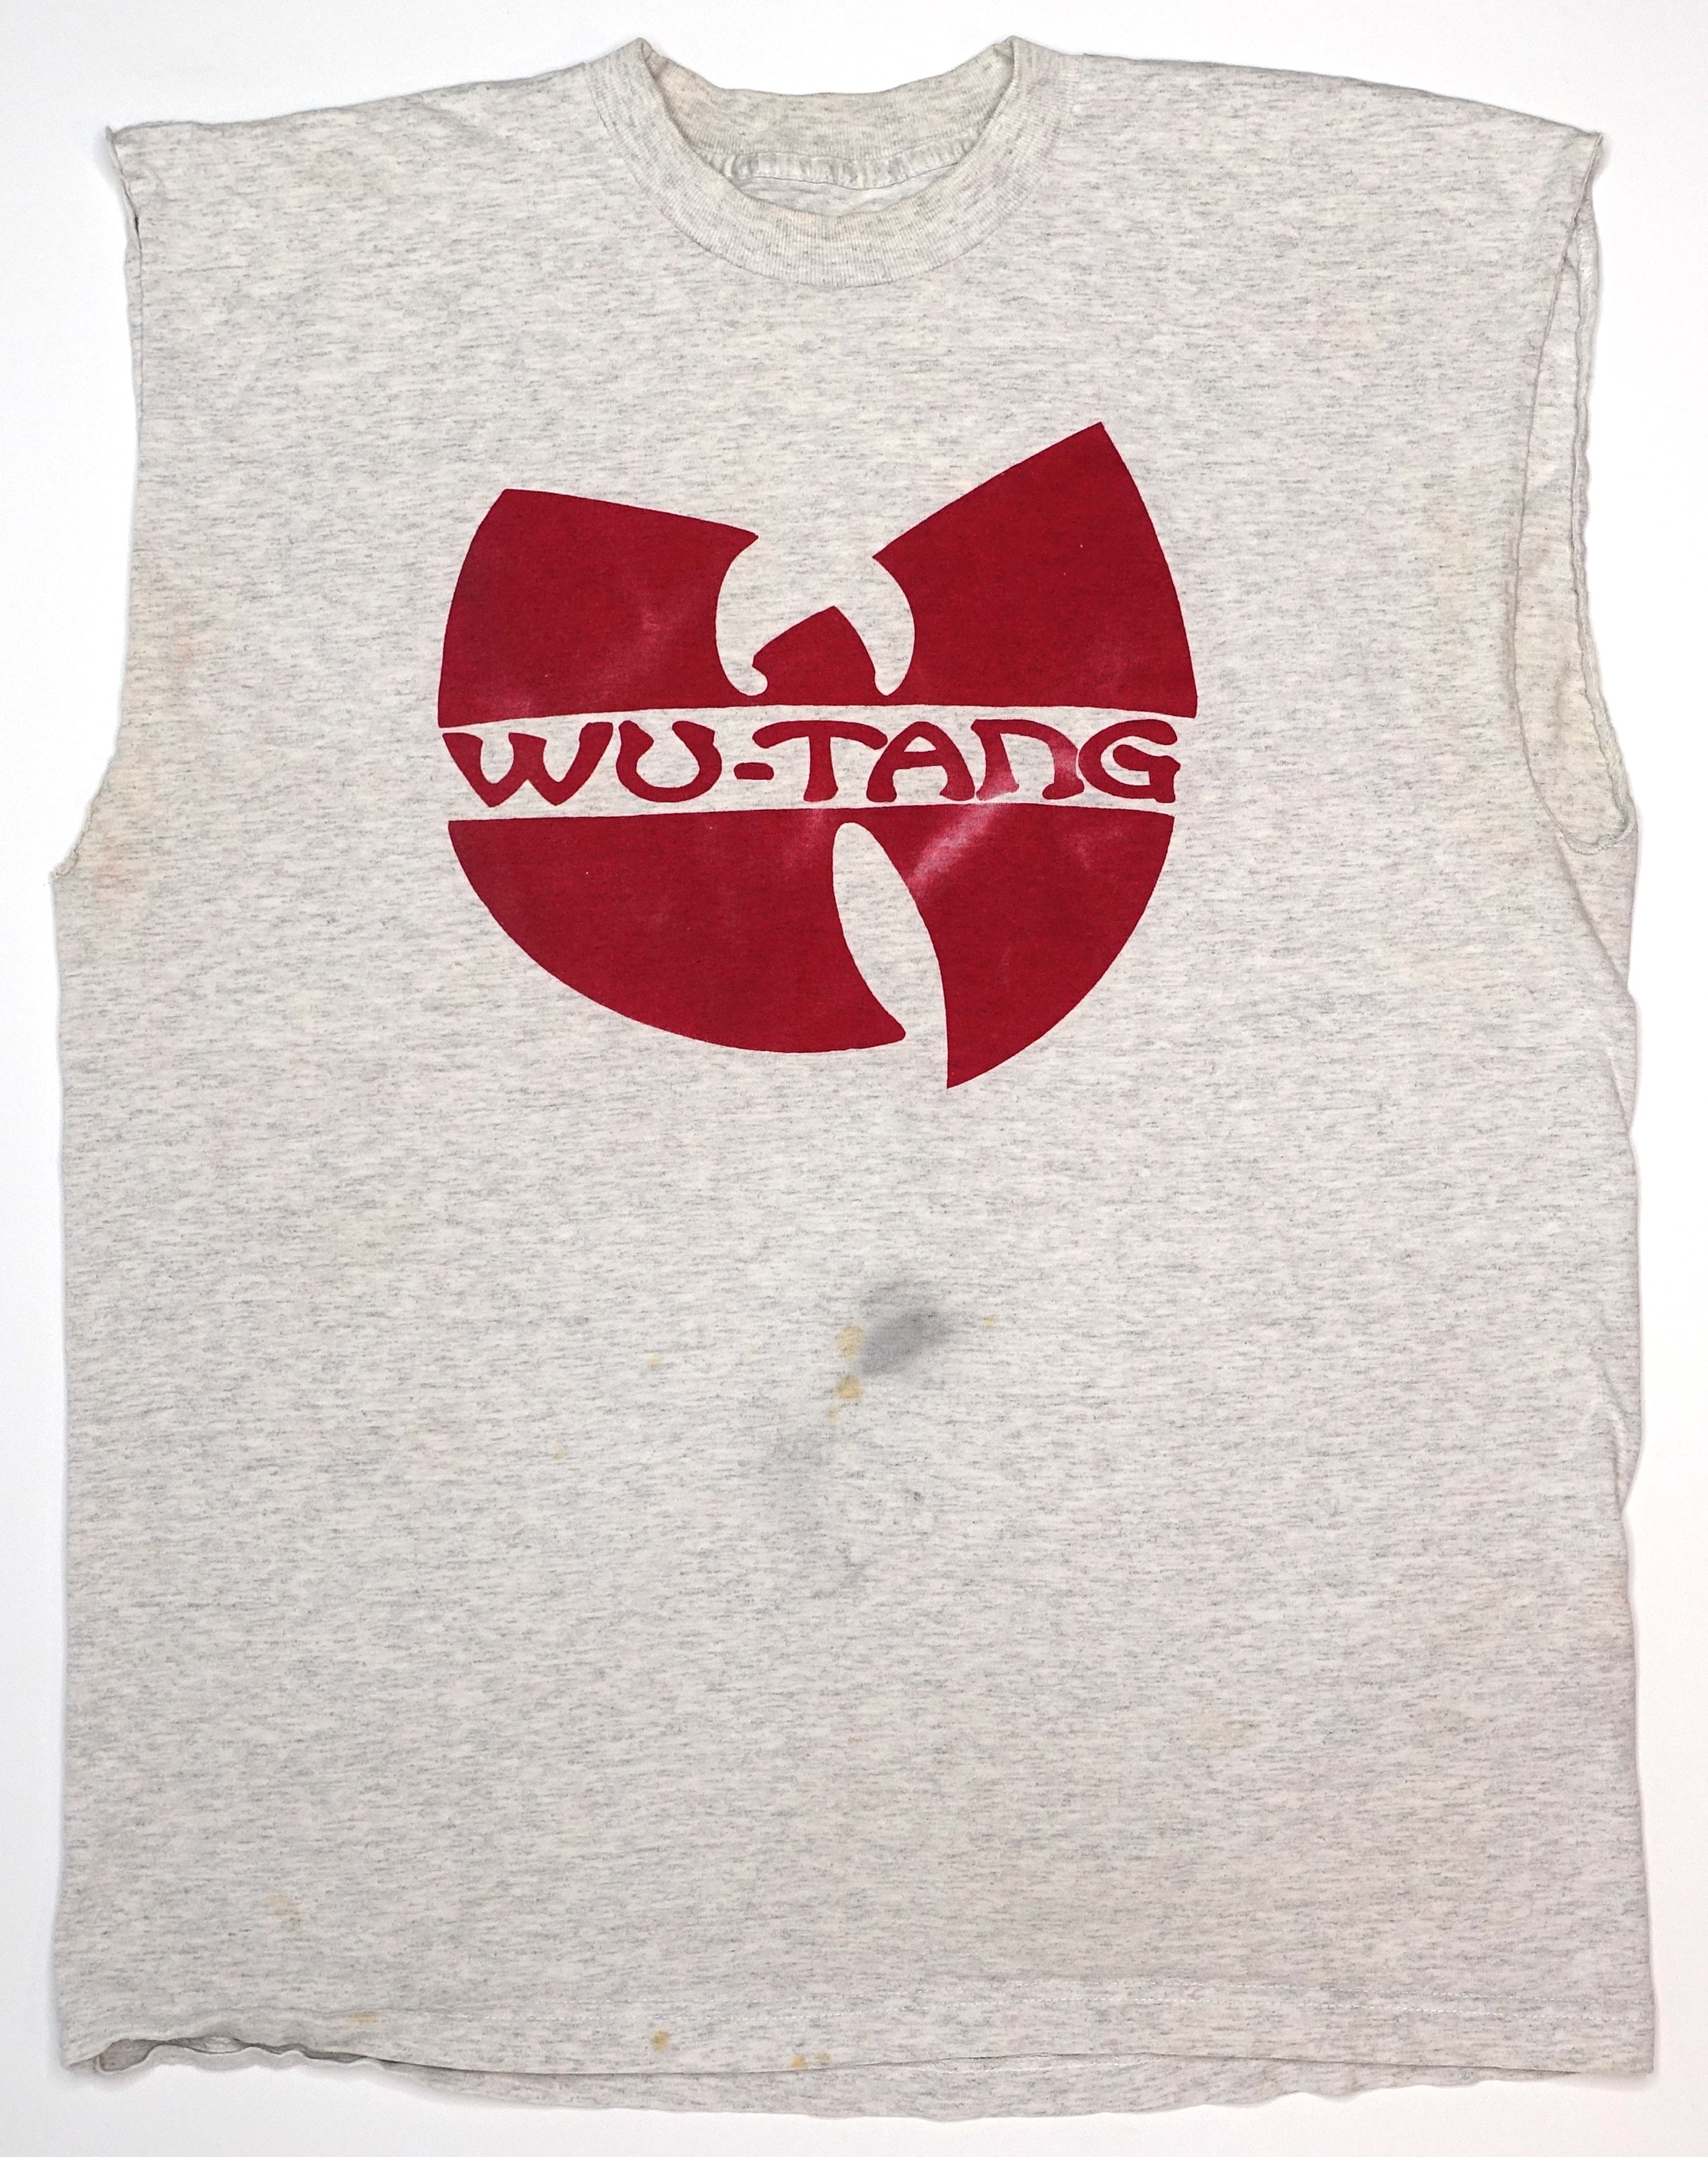 Wu-Tang Clan - "W" Sleeveless Shirt Size XL